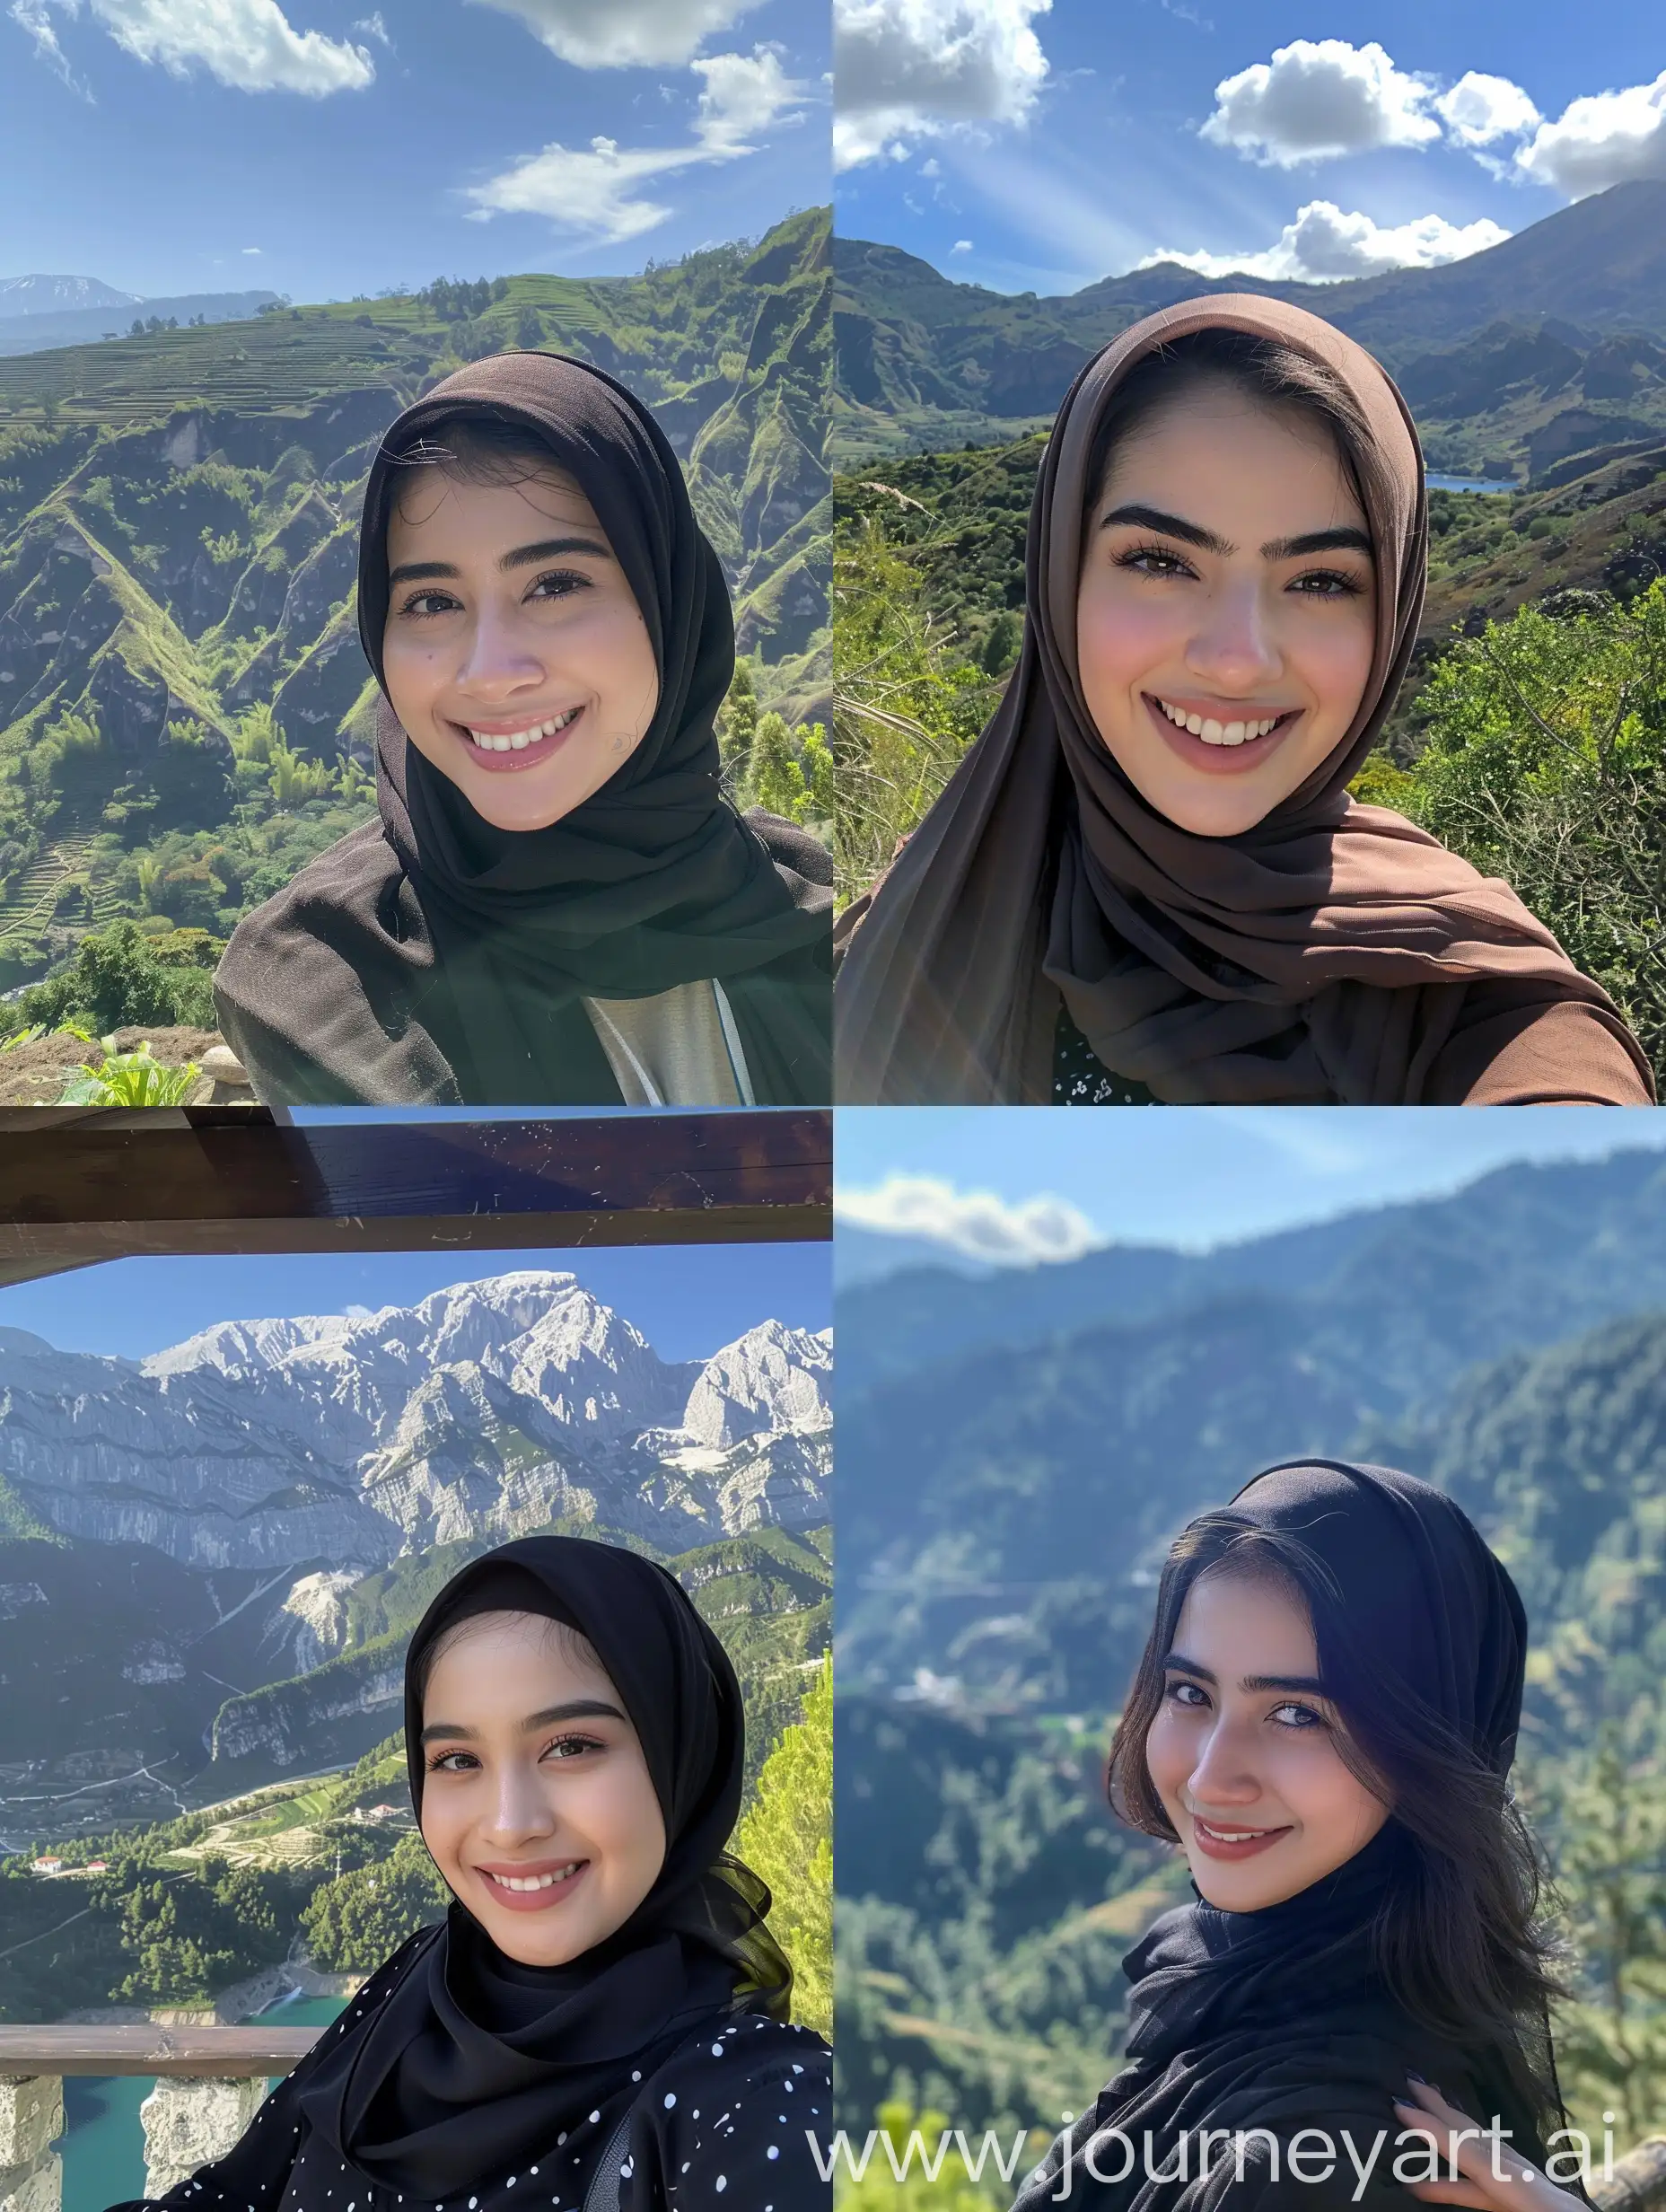 Smiling-Hijabi-Woman-in-Mountain-Selfie